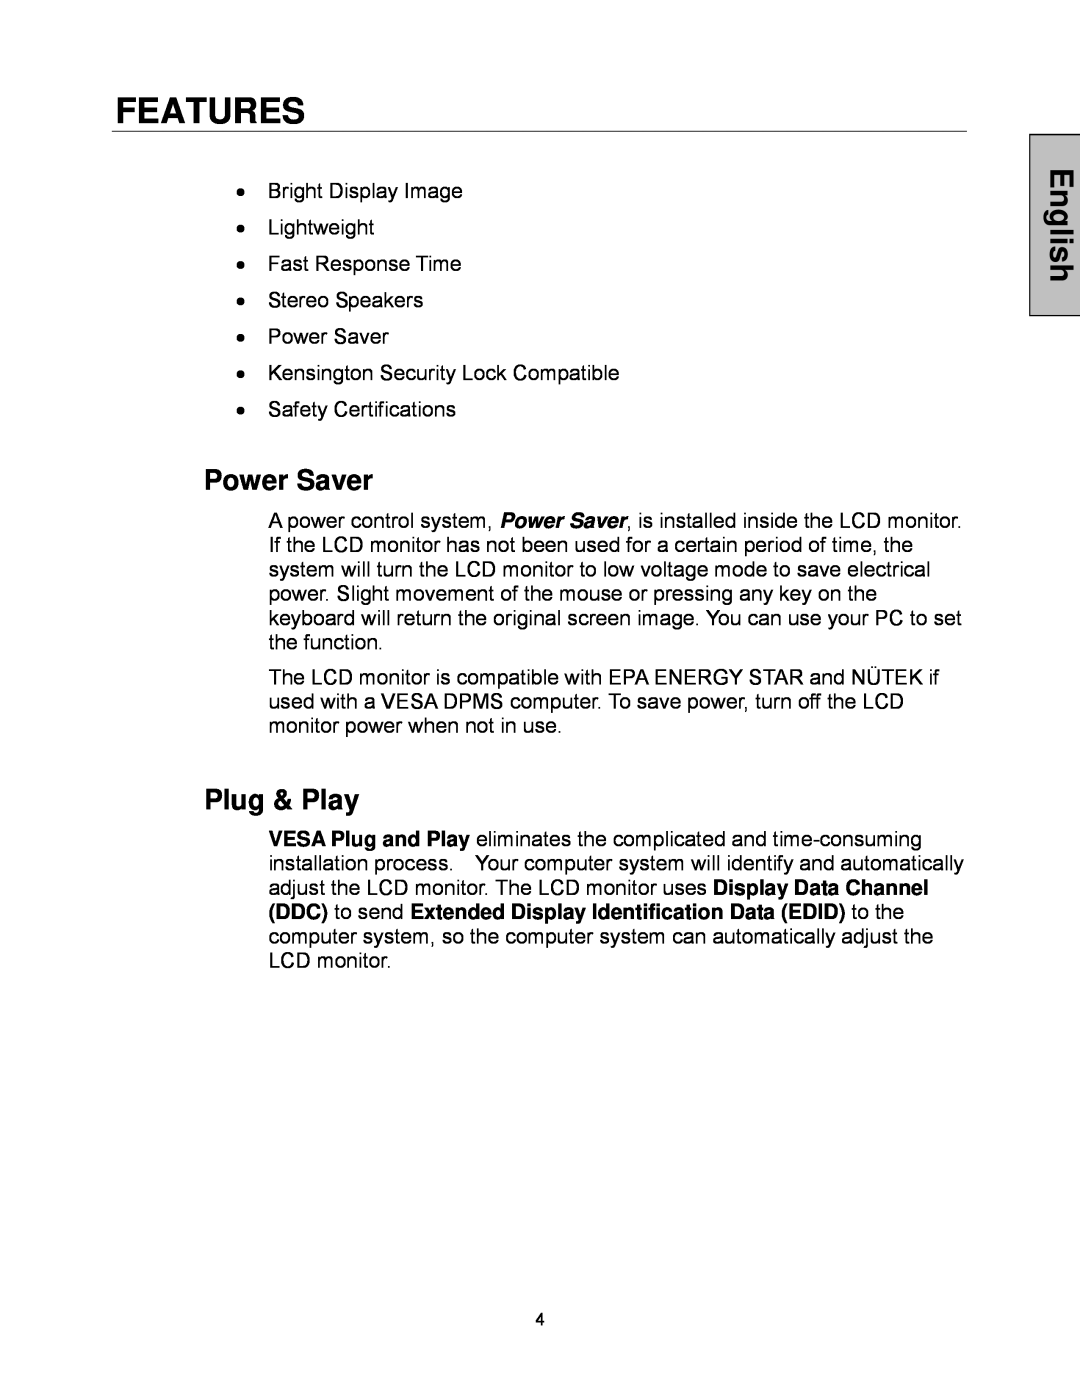 Westinghouse LCM - 19v5 manual Features, Power Saver, Plug & Play, English 